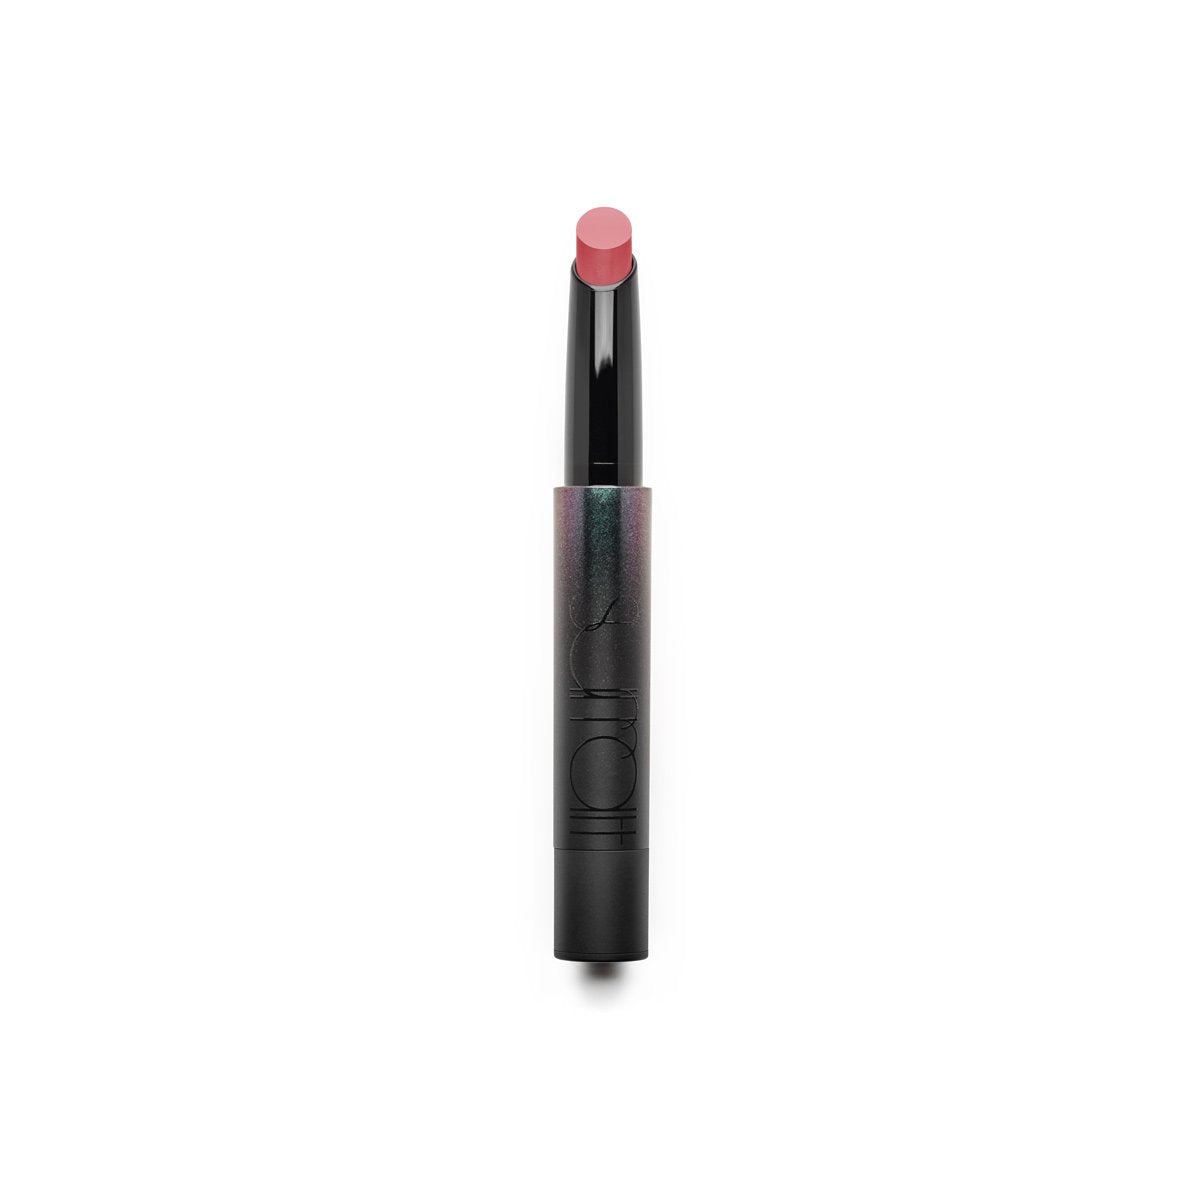 PERFECTIONNISTE - PINKY ROSE - creamy moisturizing lipstick lip balm in pinky rose shade